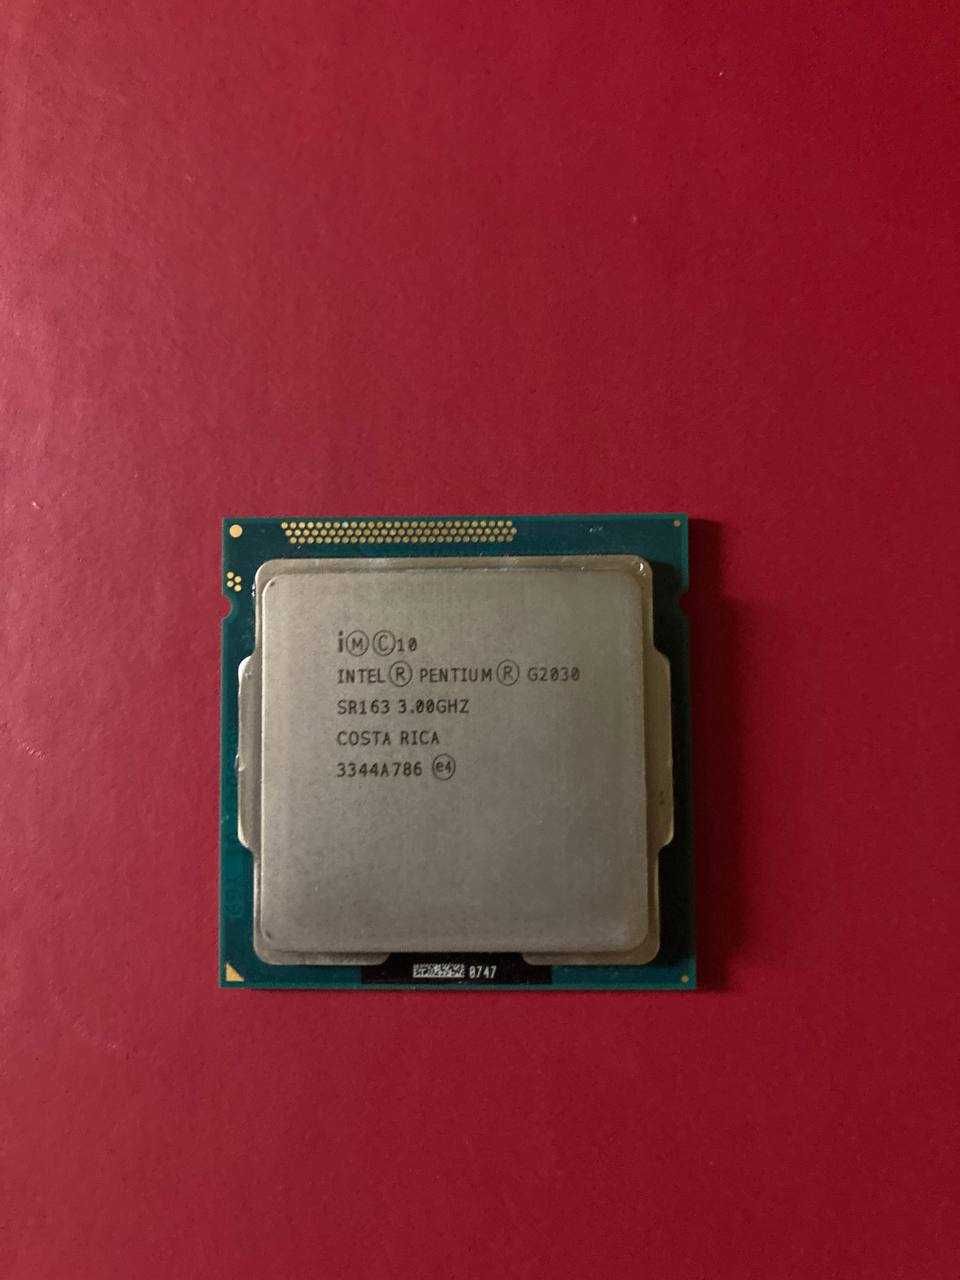 процессор Intel Pentium G2030 SR163 3.00ghz